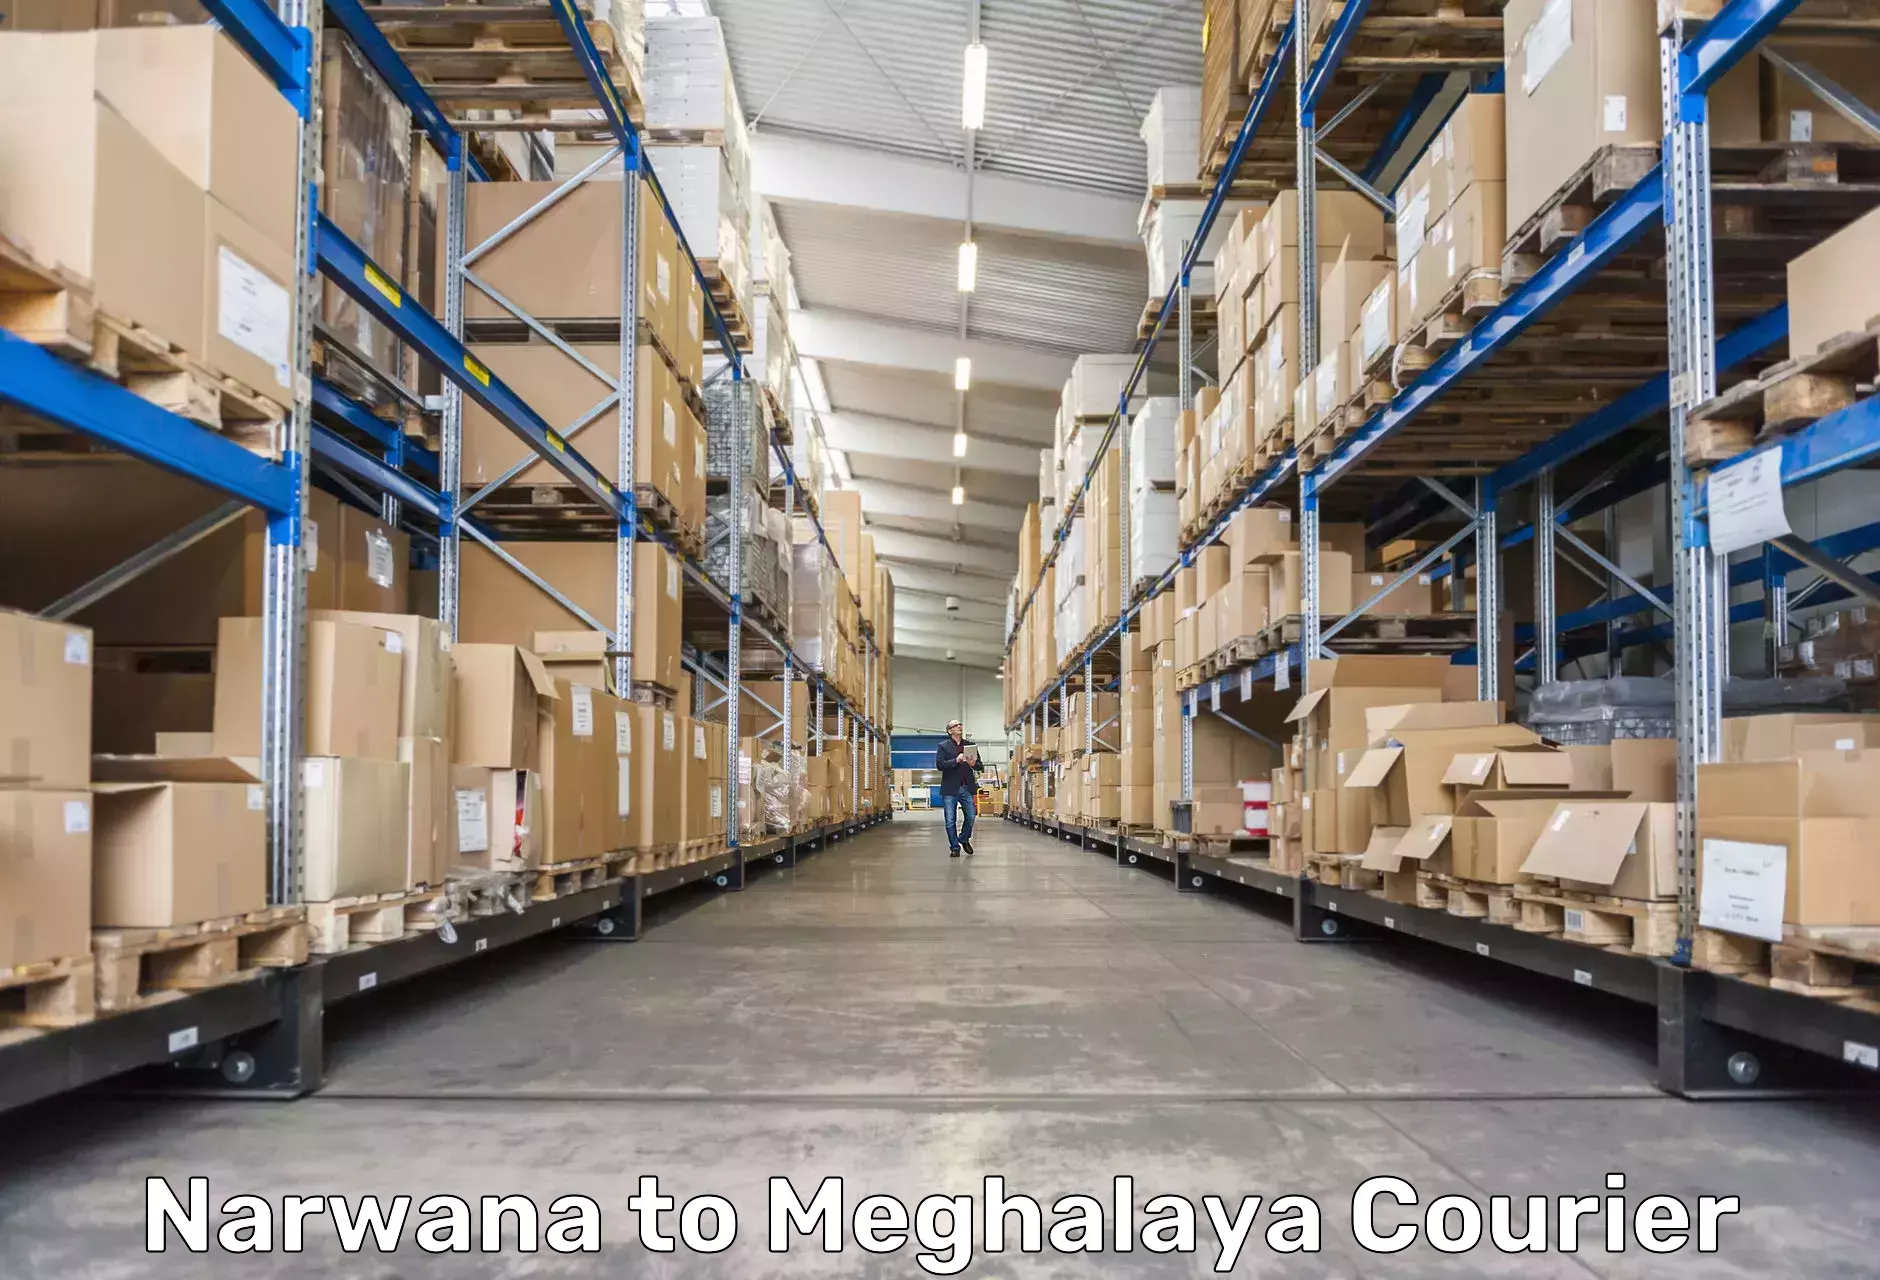 Express mail service Narwana to Meghalaya